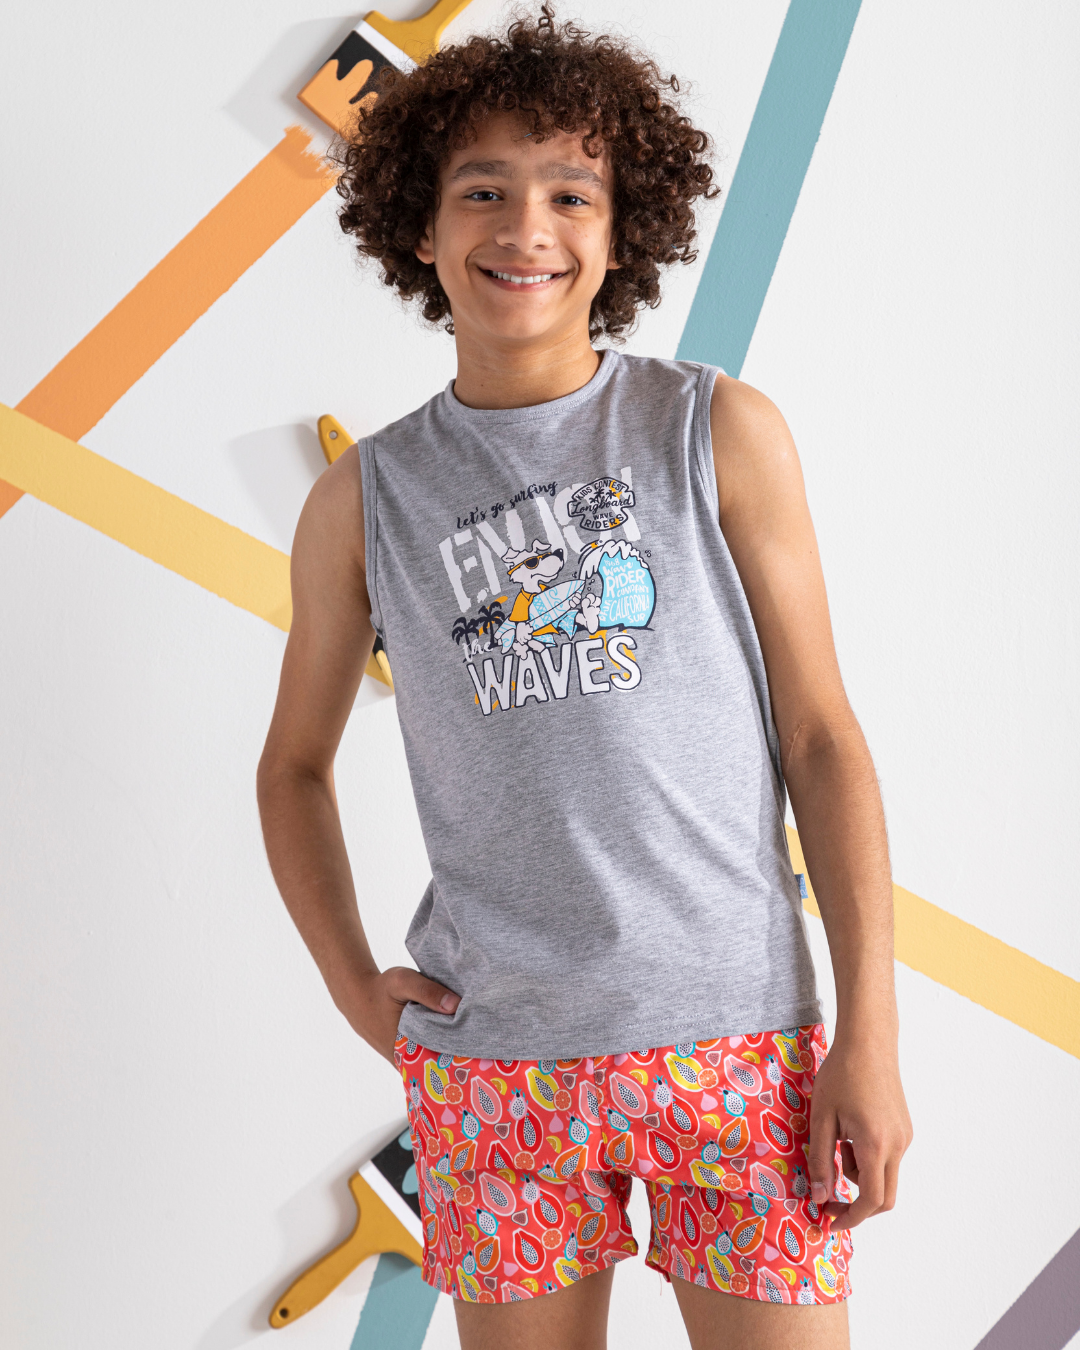 Enjoy Waves T-shirt for boys, 100% cotton